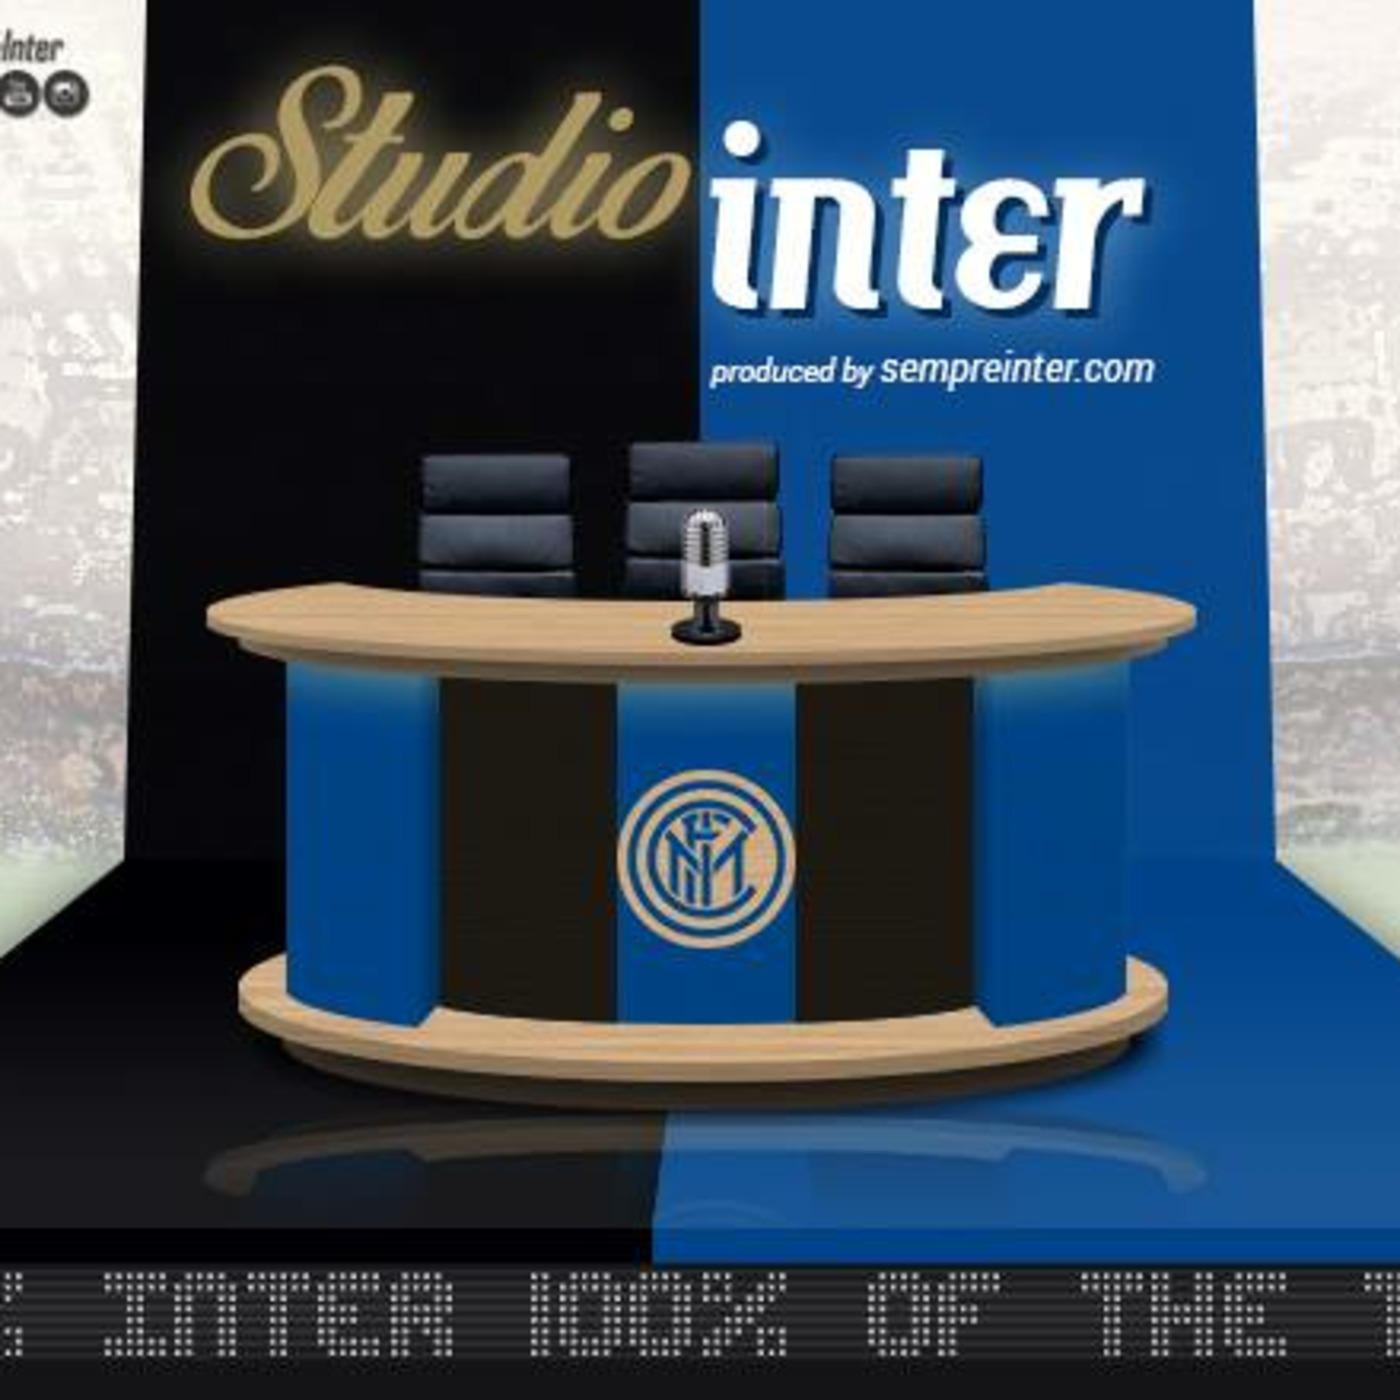 Studio Inter Episode 72: ”Did Rizzoli Cost Inter The Match vs Juventus?”